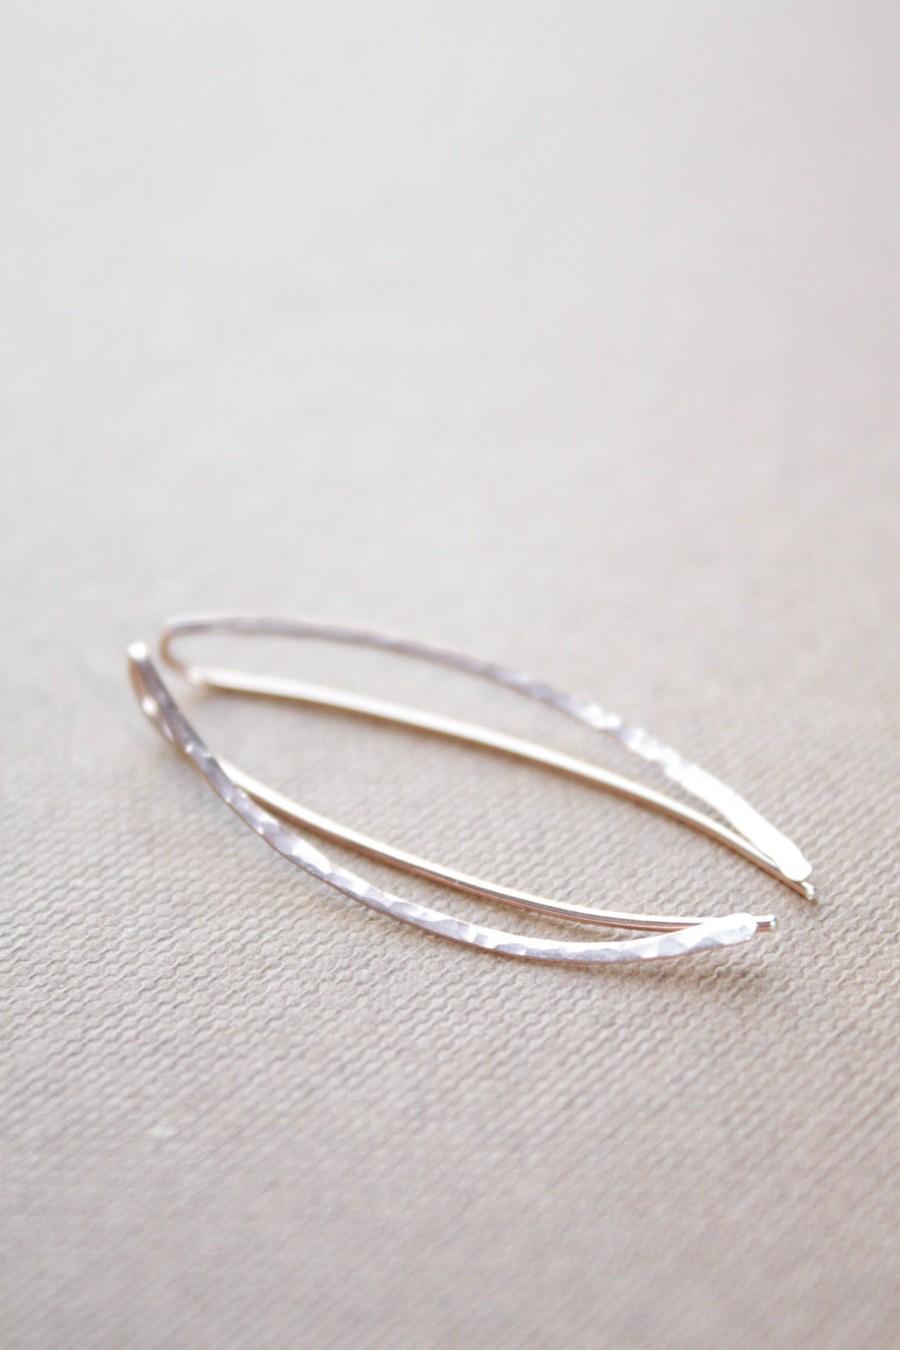 Hochzeit - Simple Ear Climber Modern Earring in Sterling Silver Gold or Rose Gold Hammered Earrings Handmade Ear Climbers Ear Crawler Bar Earrings